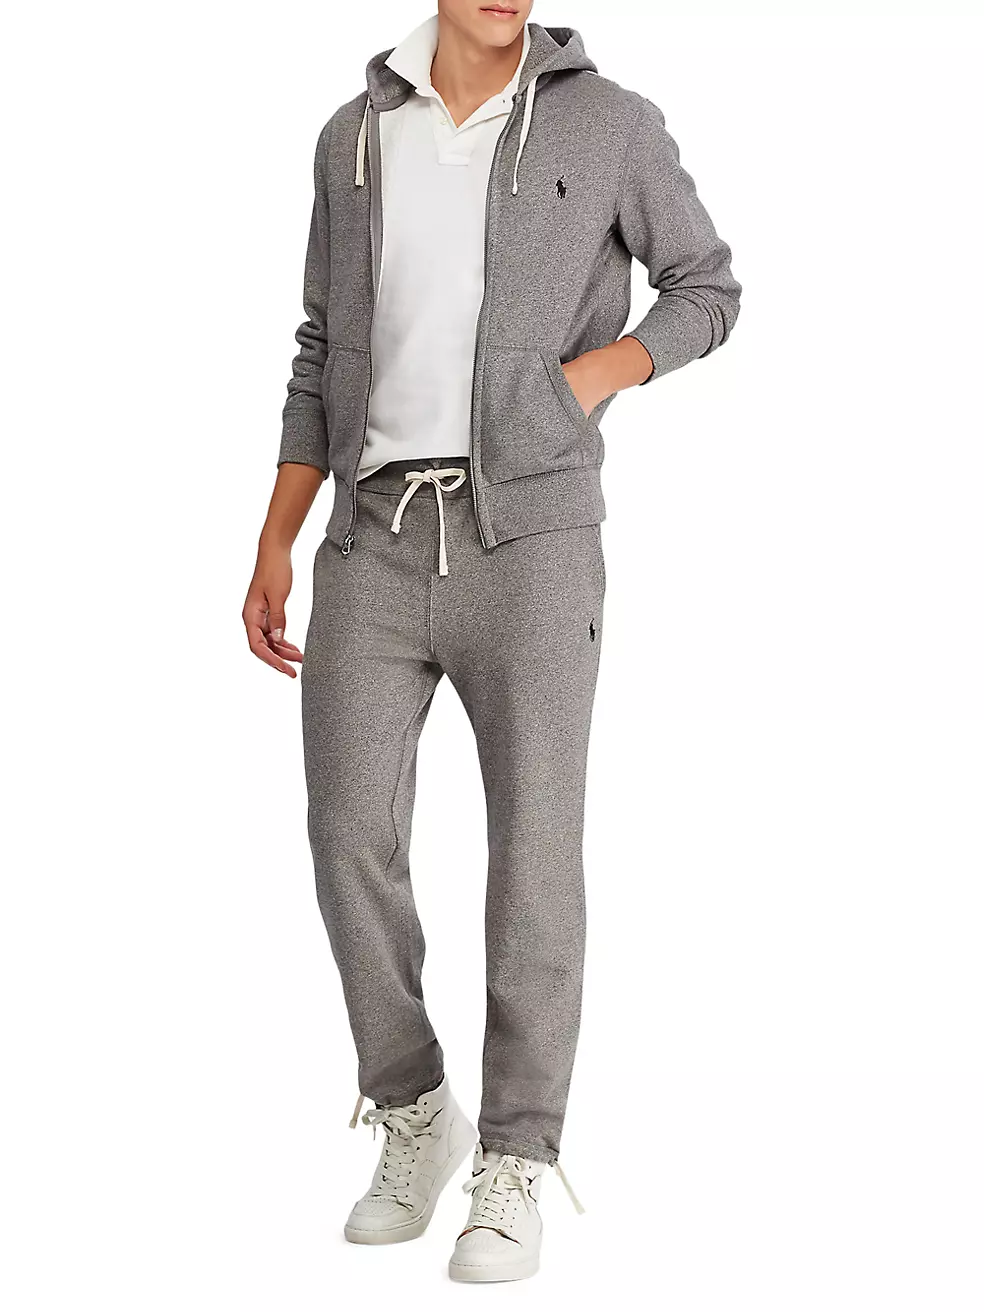 2 Replacement Drawstring String for Pants Sweatpants Sweatshirt Hooded Grey  Gray